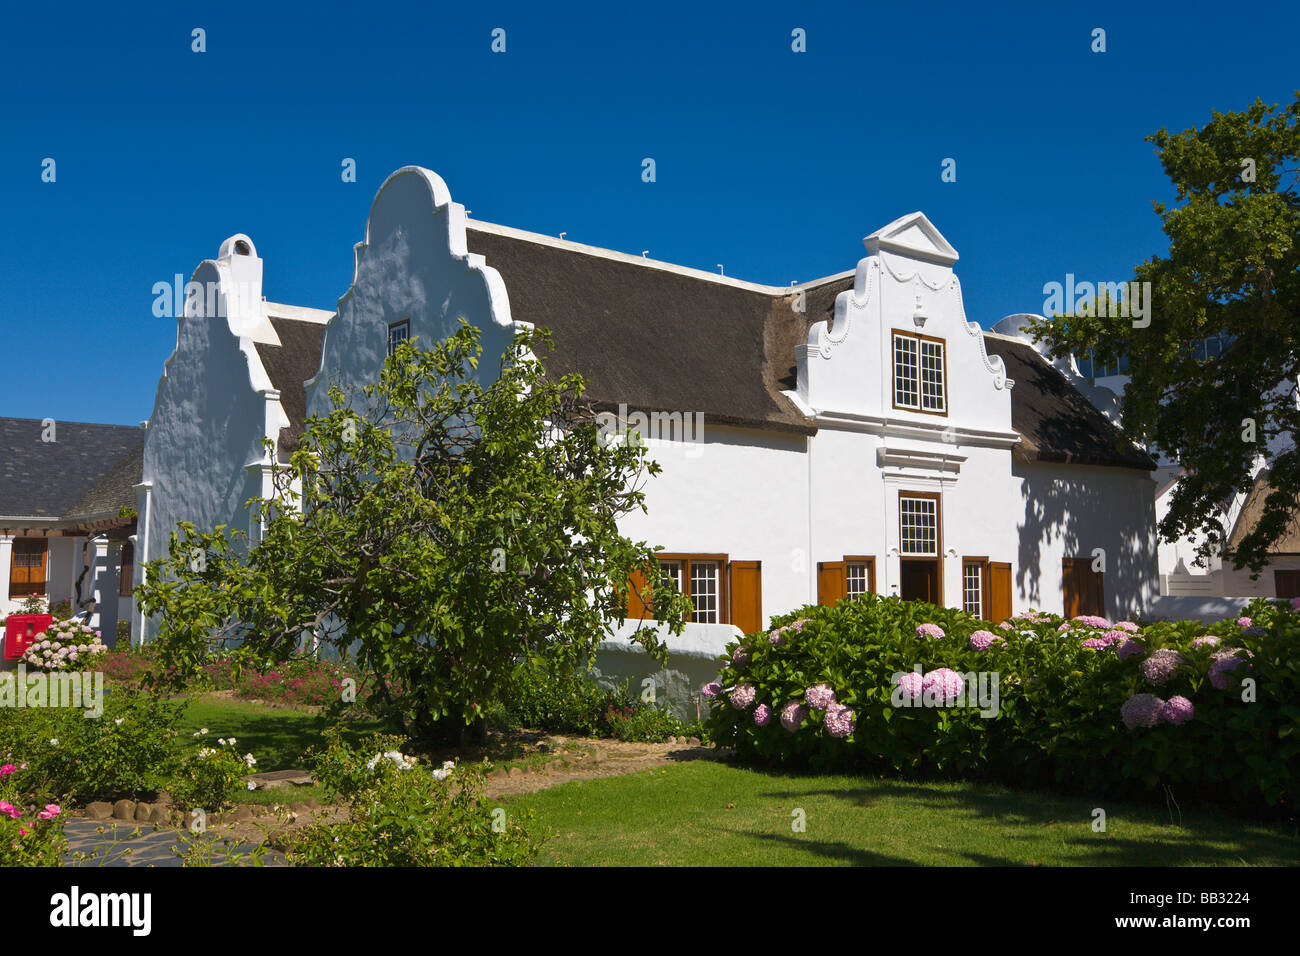 Maison bourgeoise, Stellenbosch, South Africa' Banque D'Images